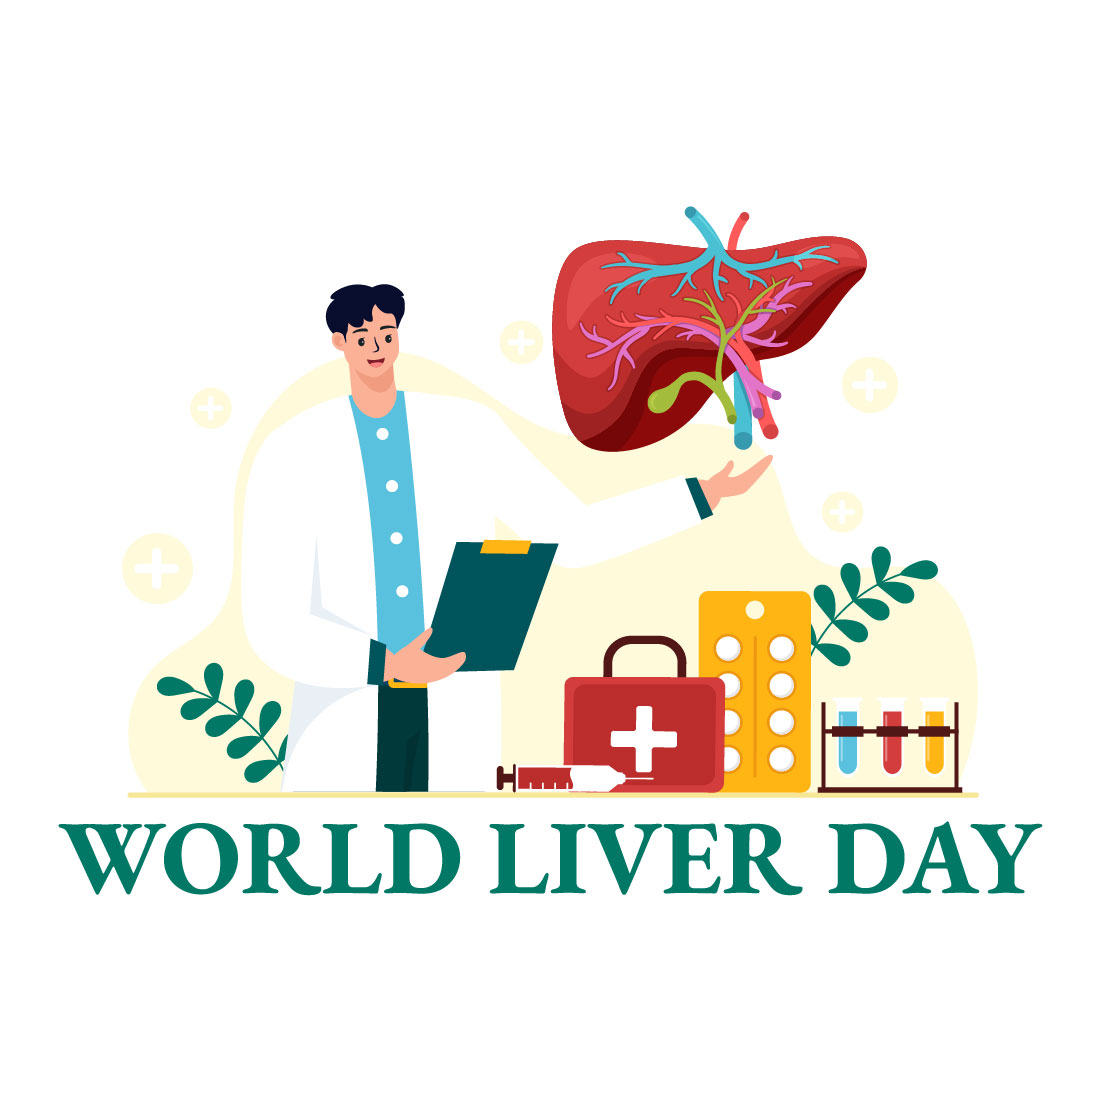 13 World Liver Day Illustration cover image.